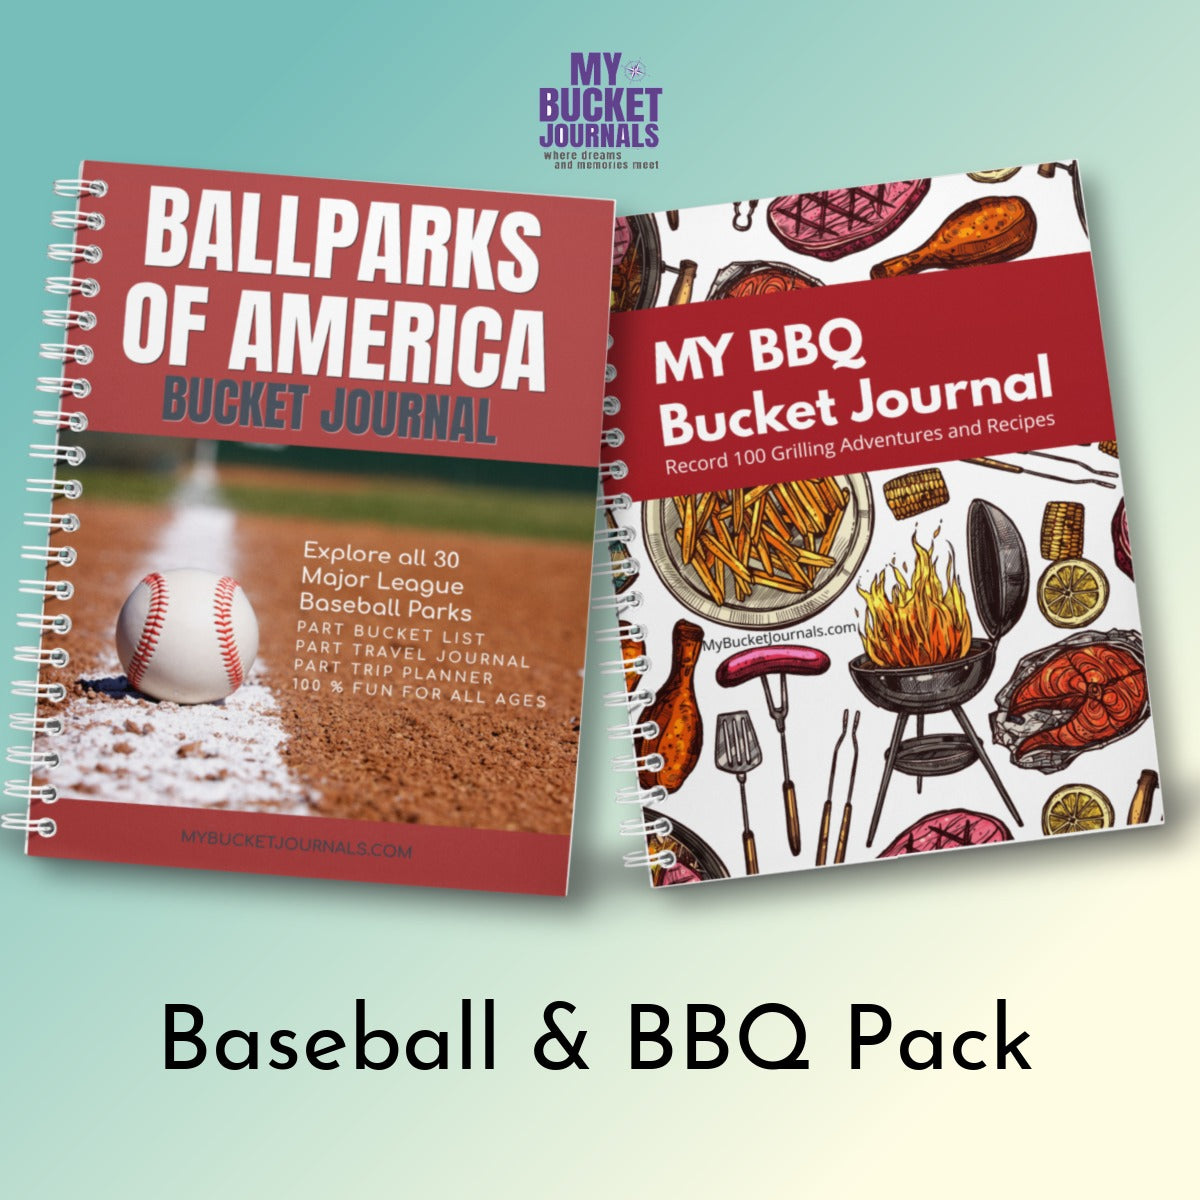 Baseball & BBQ Pack